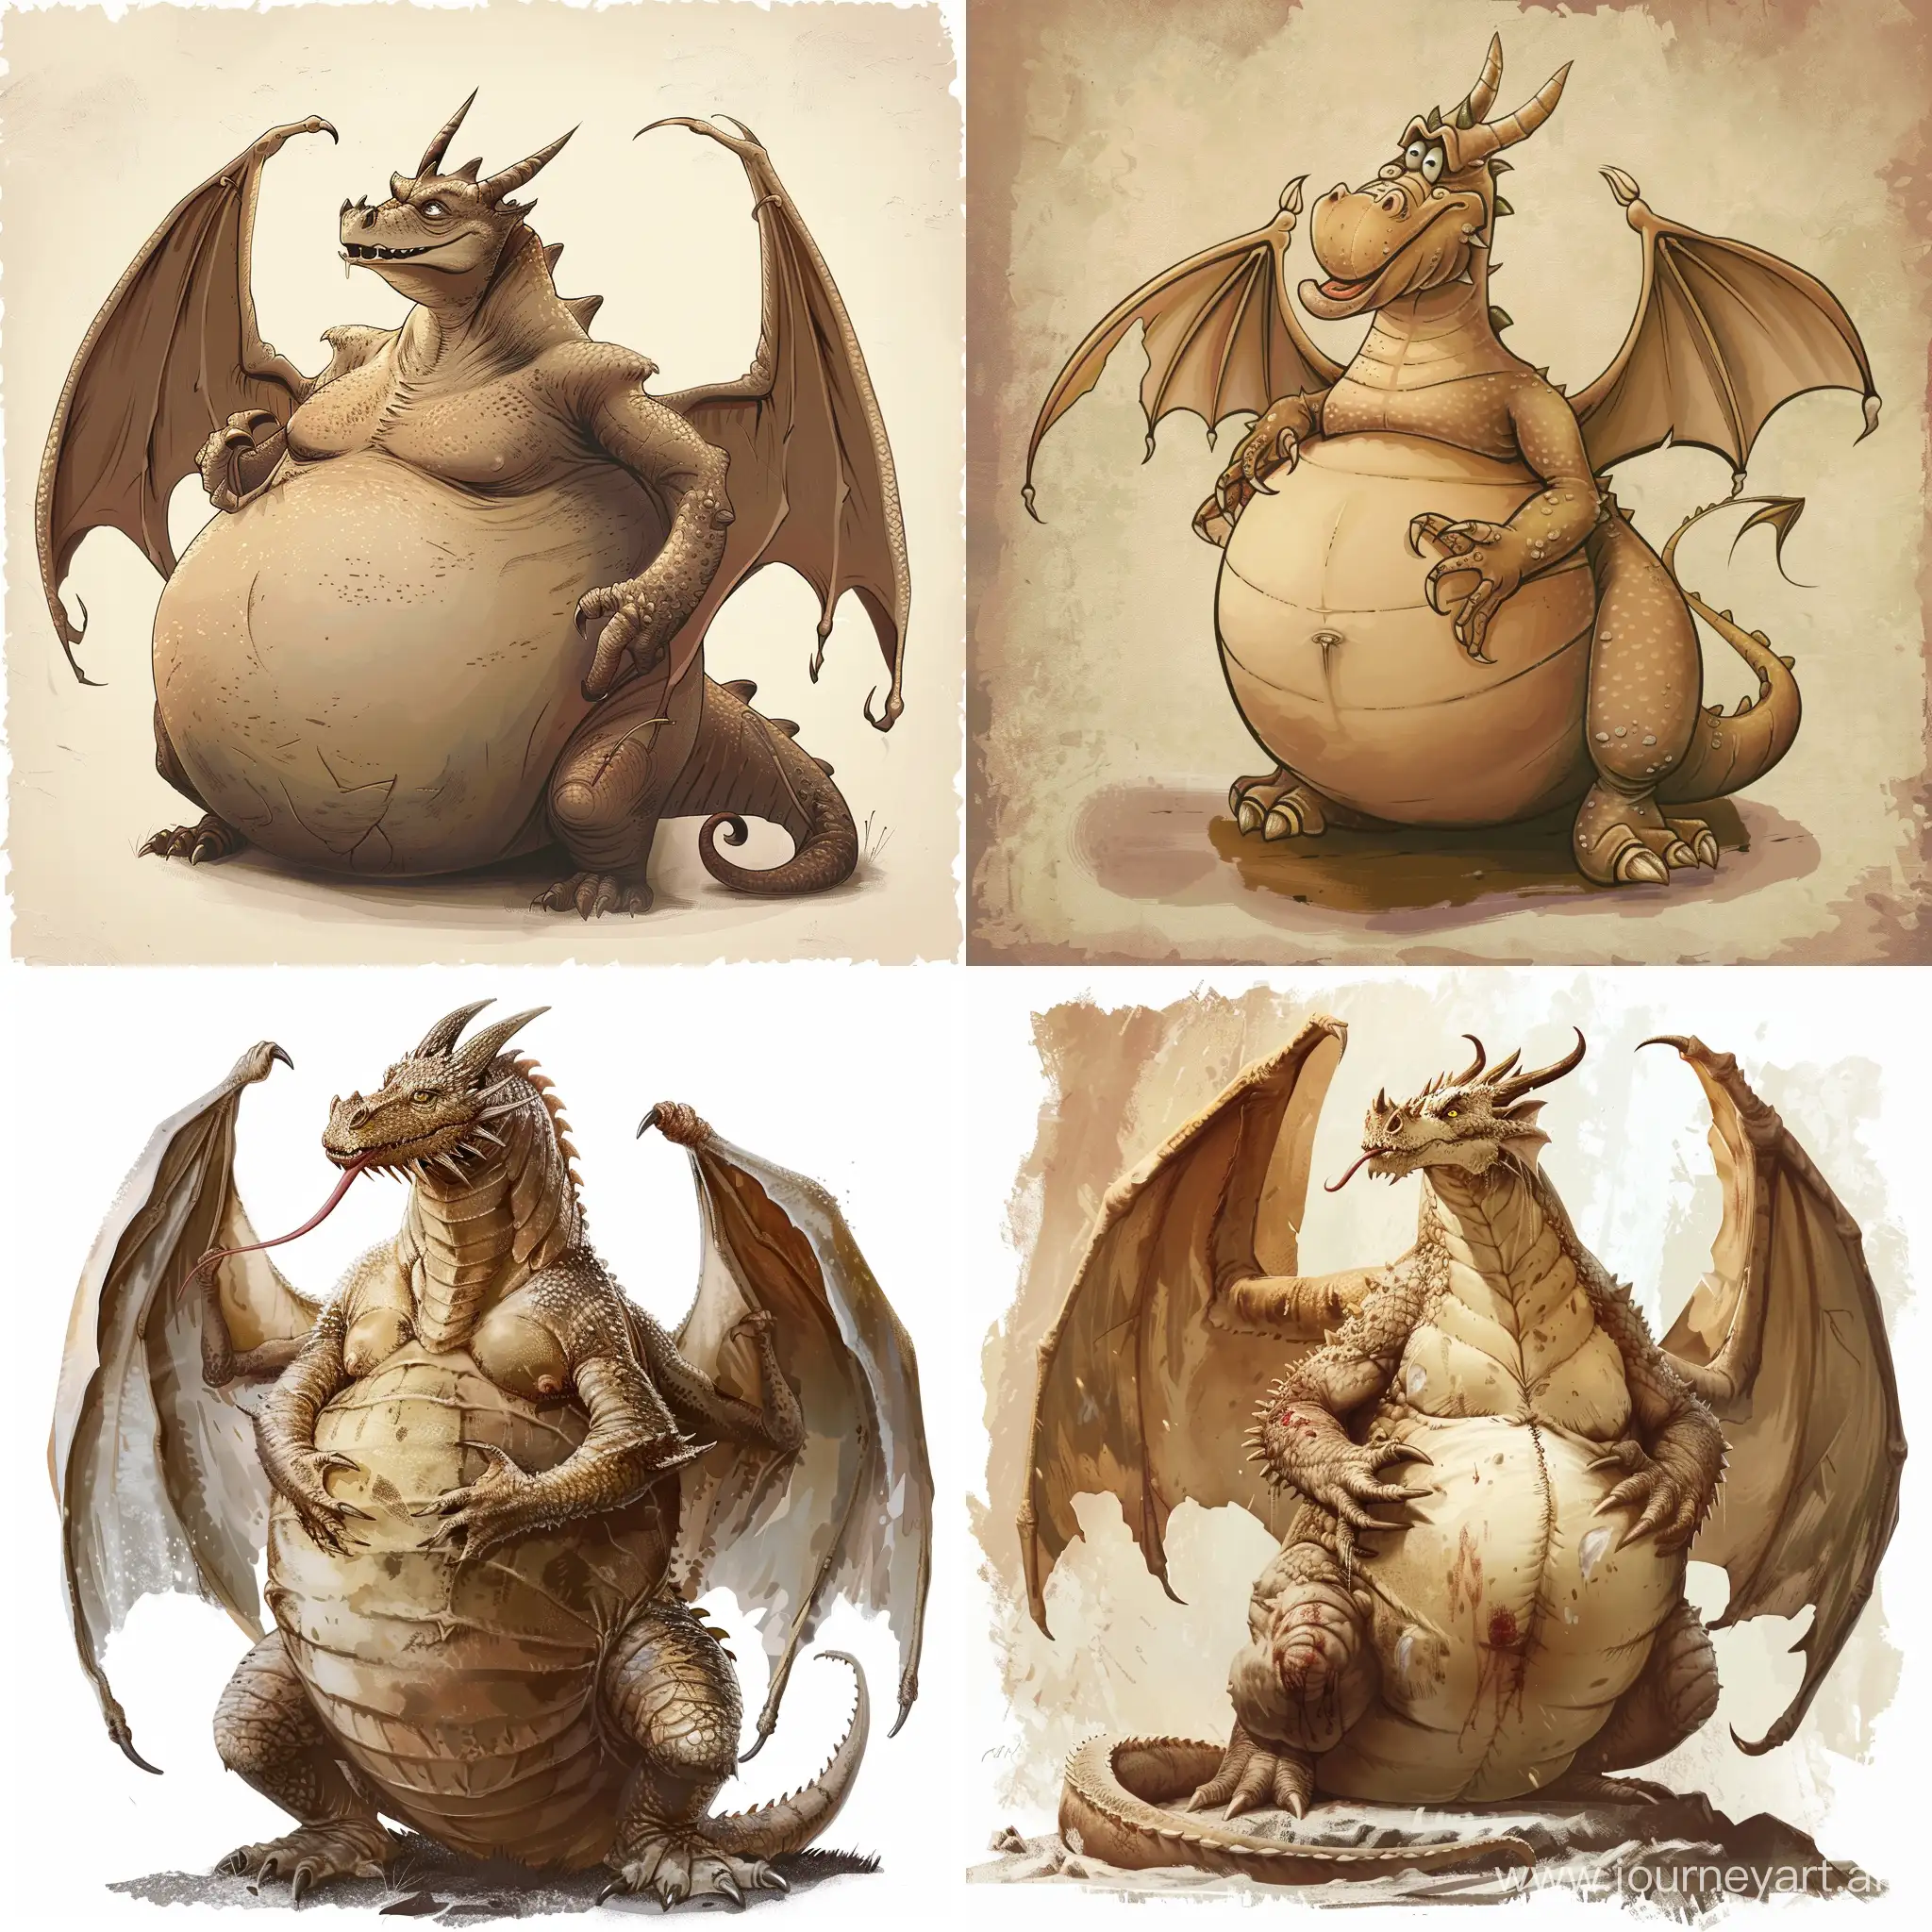 Chubby-Dragon-Gaining-Weight-in-Pixel-Art